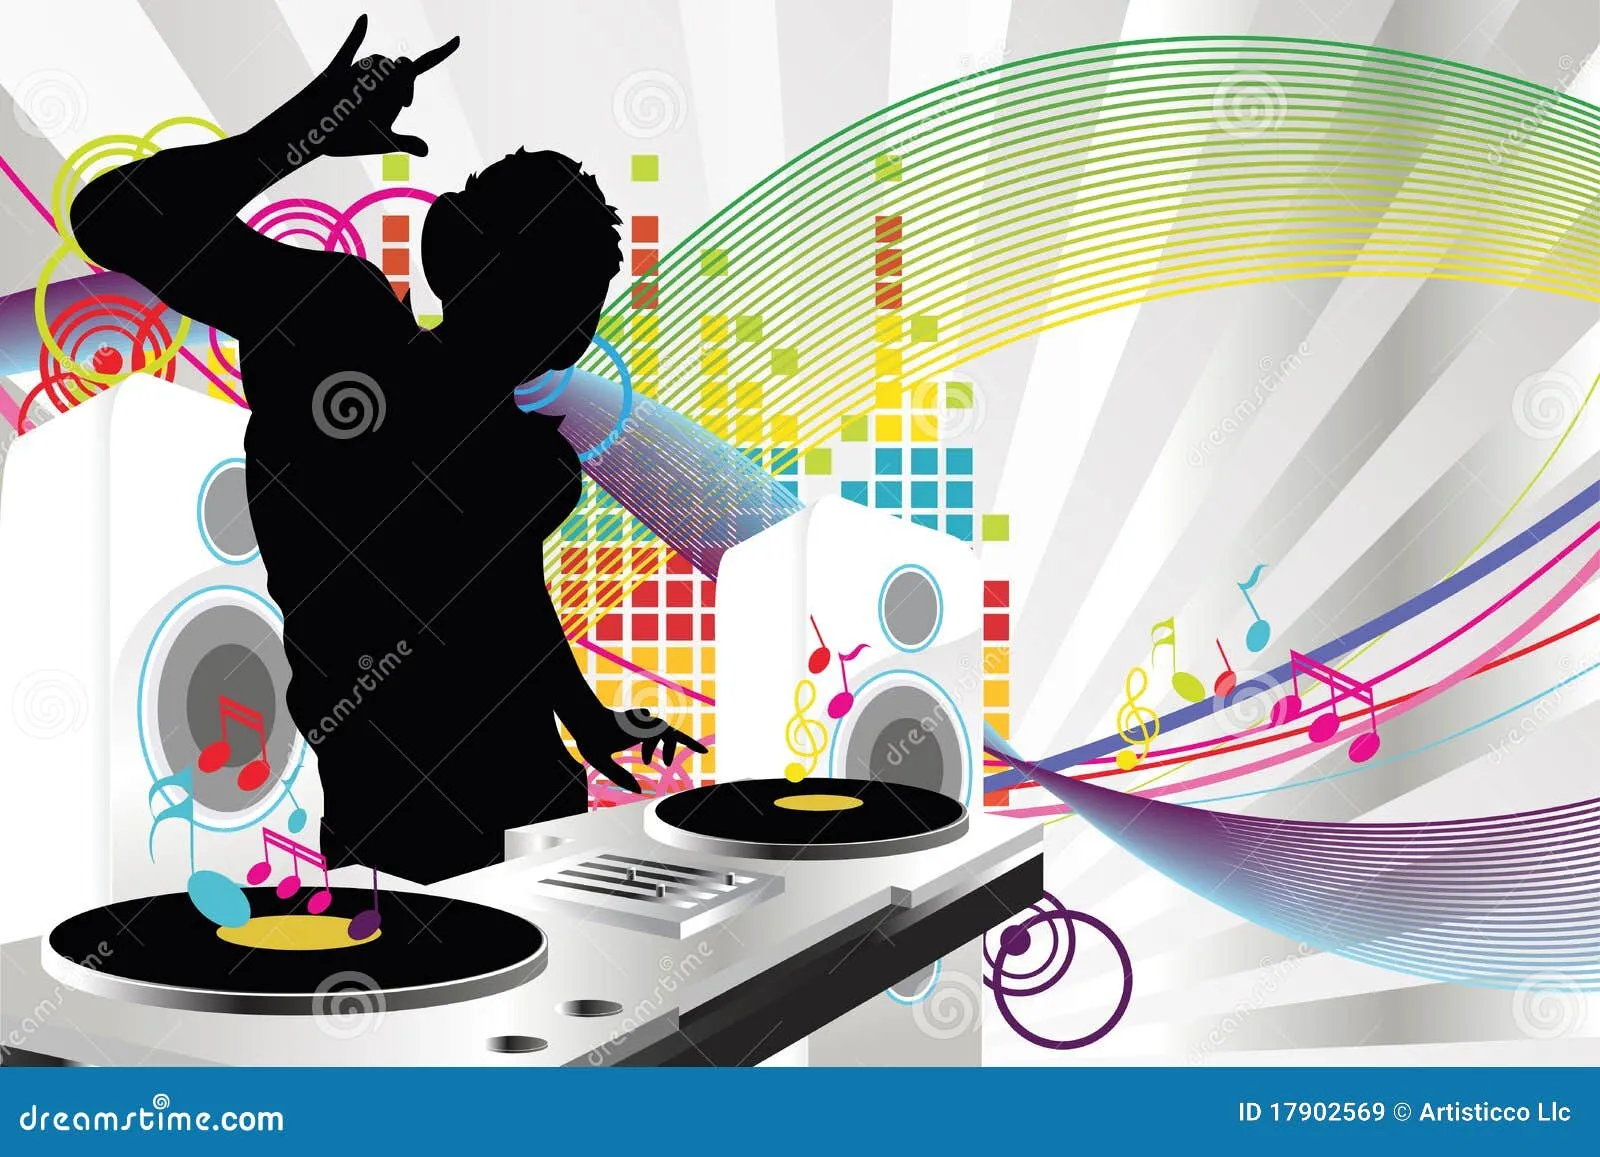 DJ Music Royalty Free Stock Images - Image: 17902569